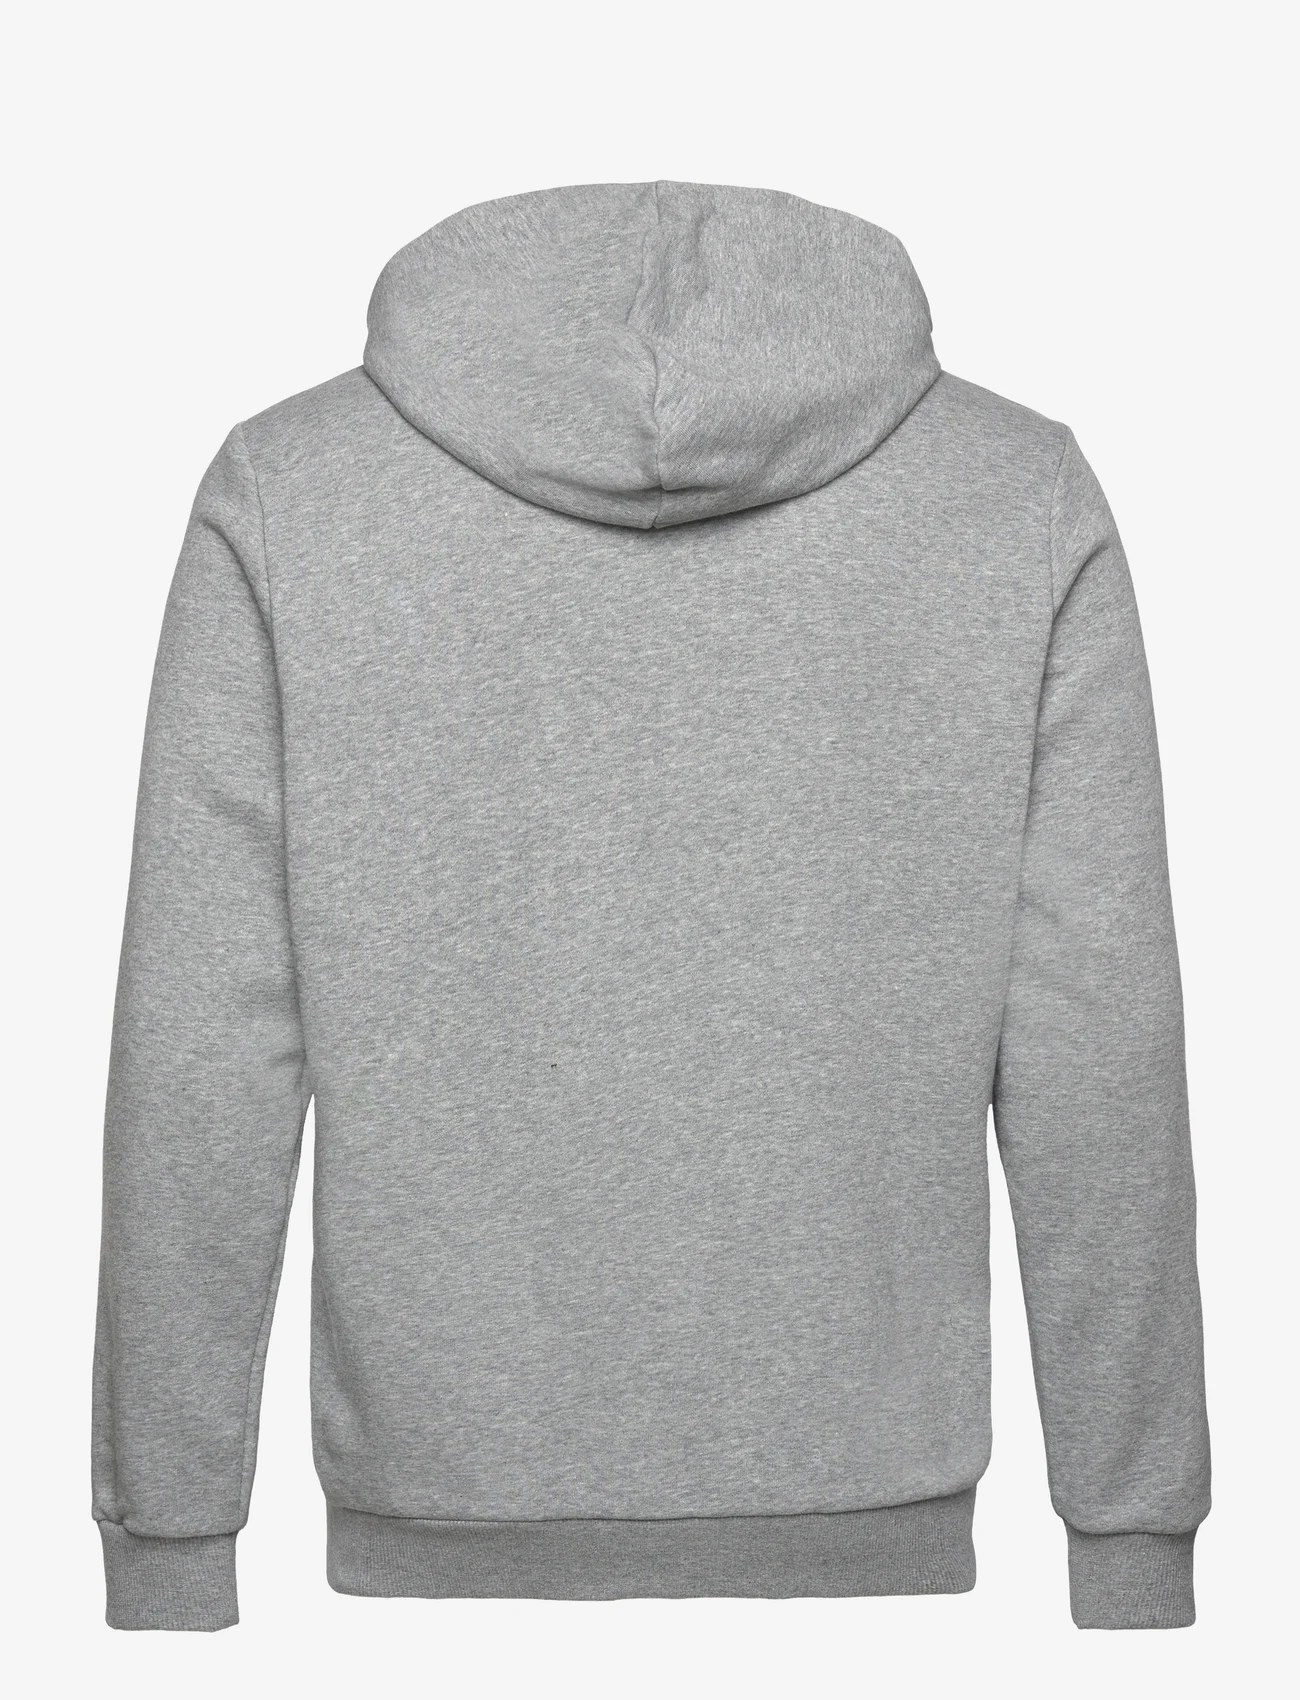 PUMA - teamGOAL 23 Casuals Hooded Jacket - hoodies - medium gray heather - 1